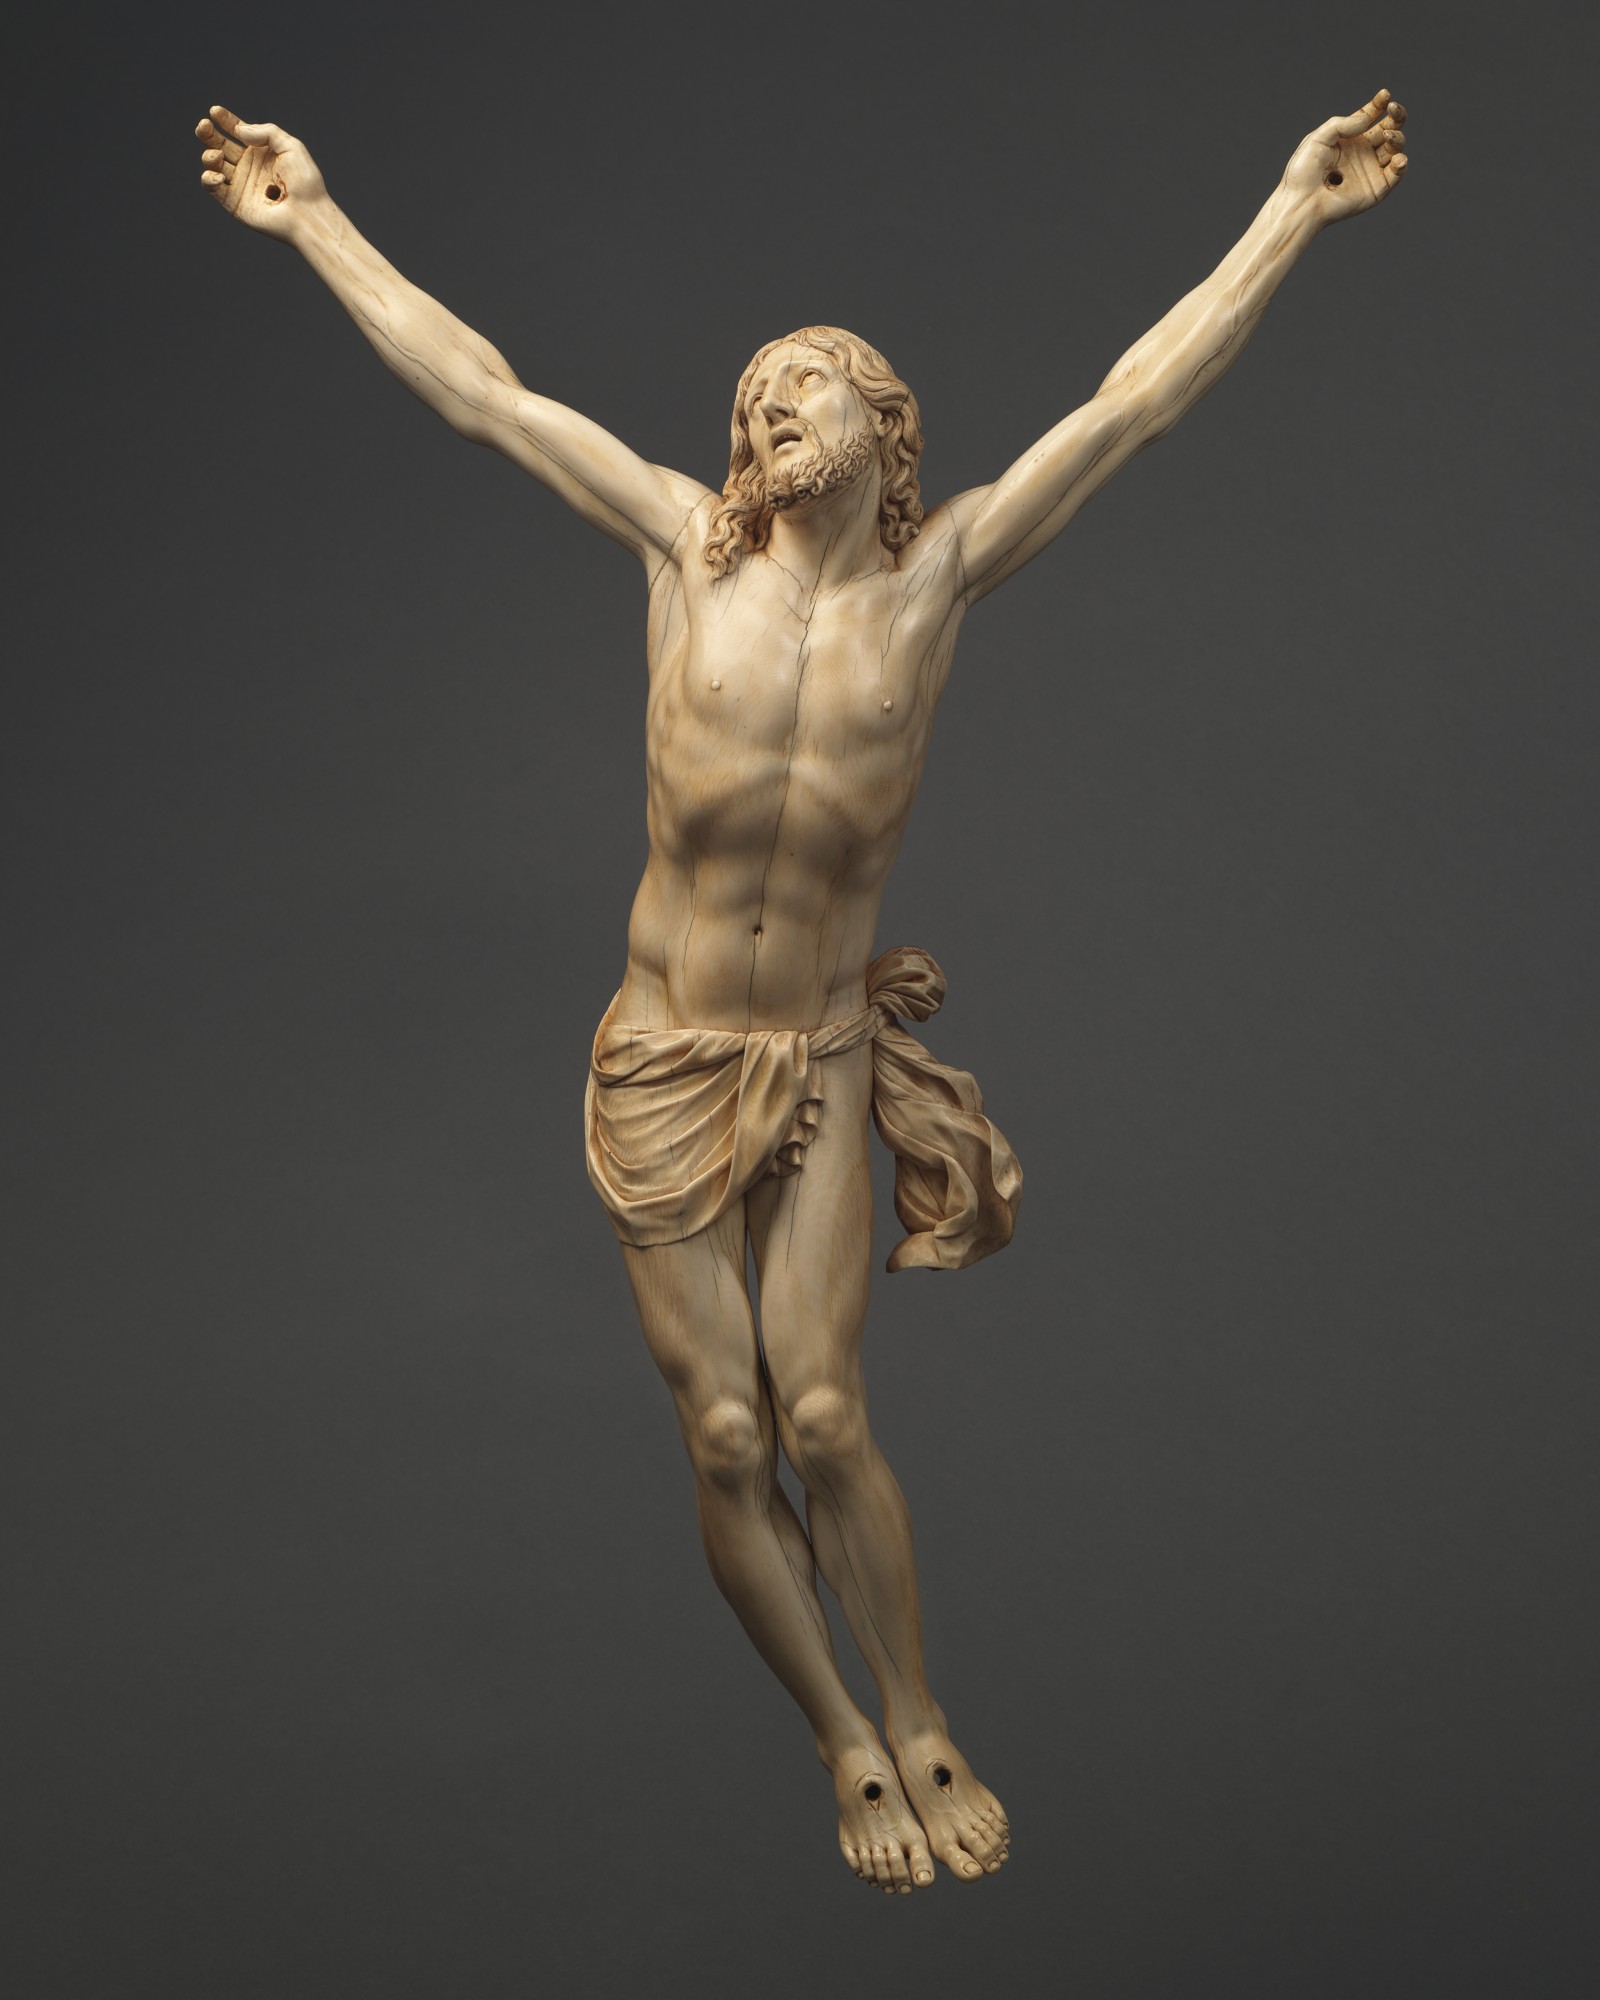 Cristo Vivo, Joseph Villermé (Saint-Claude 1660 – c. 1720 Rome), Franco-Italian, late 1